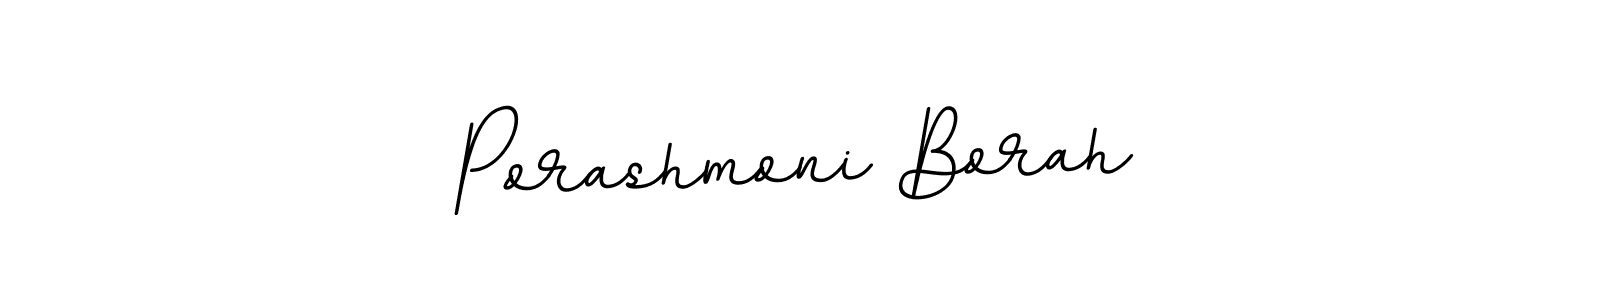 How to make Porashmoni Borah signature? BallpointsItalic-DORy9 is a professional autograph style. Create handwritten signature for Porashmoni Borah name. Porashmoni Borah signature style 11 images and pictures png